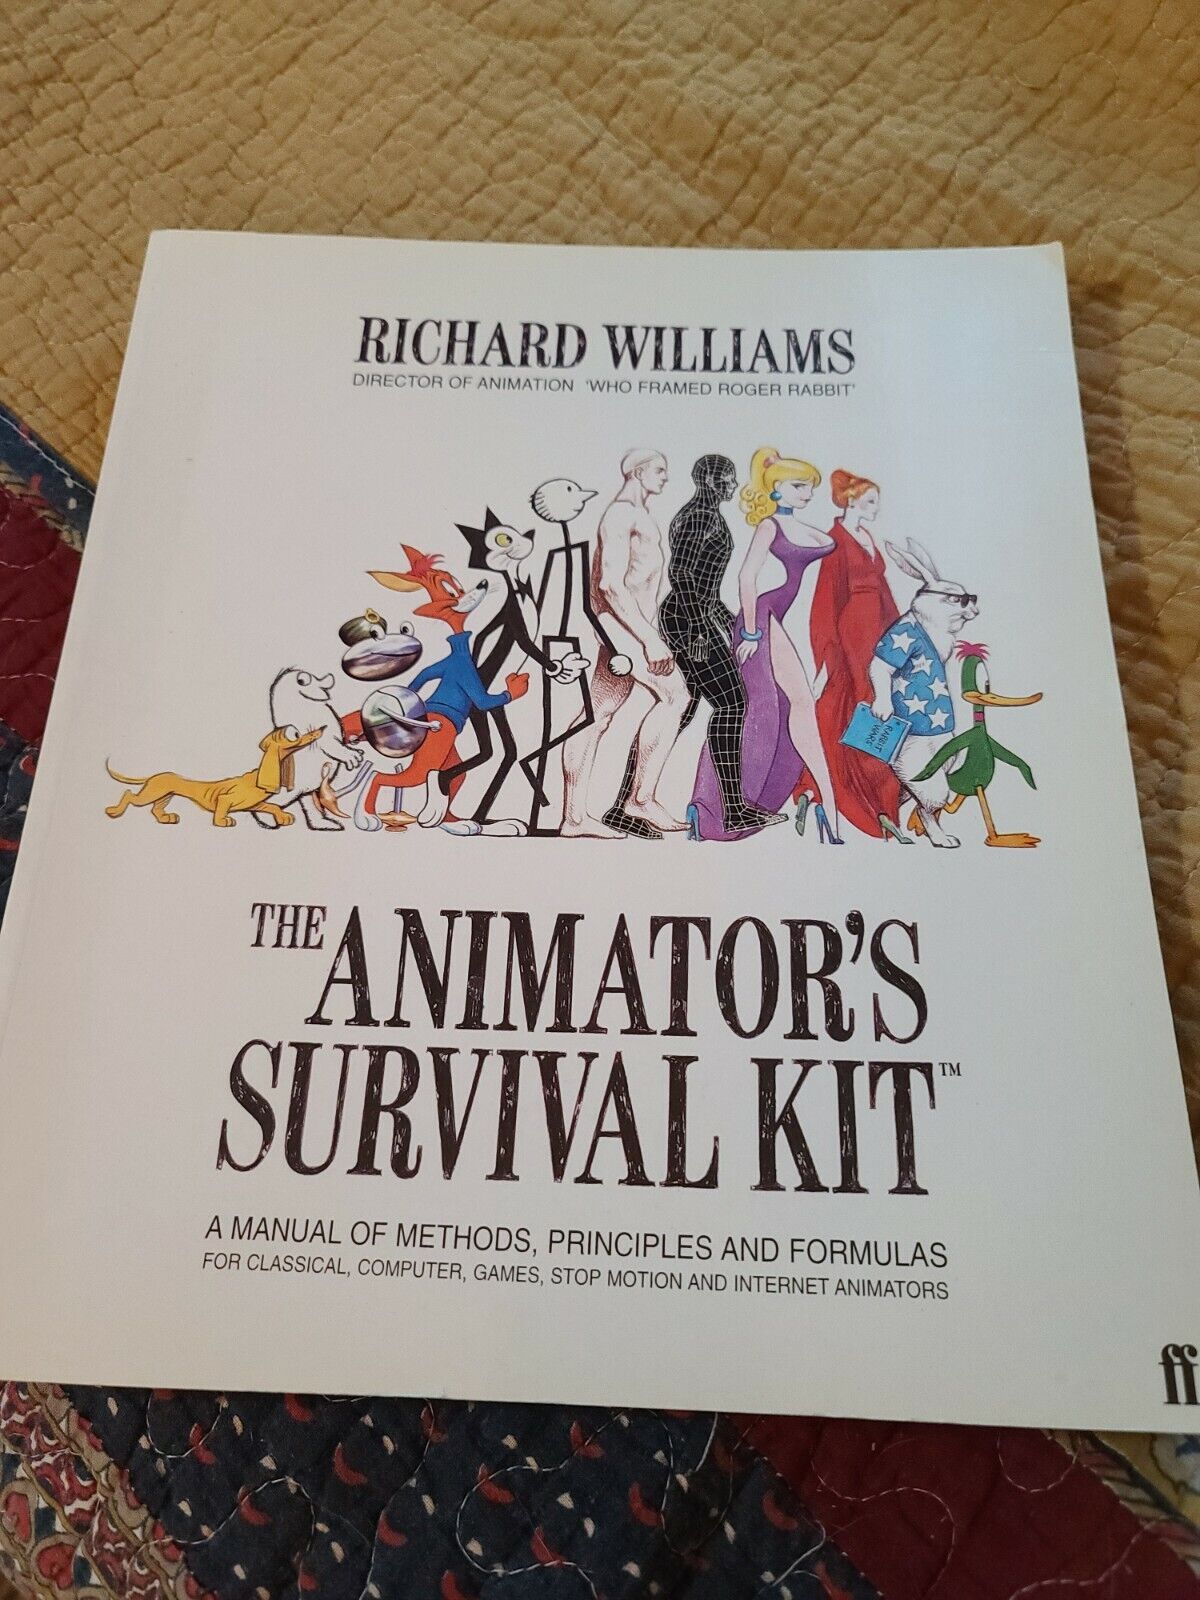 The Animator's Survival Kit by Richard Williams (Paperback, 2001) Manual  Methods 9780571202287 | eBay